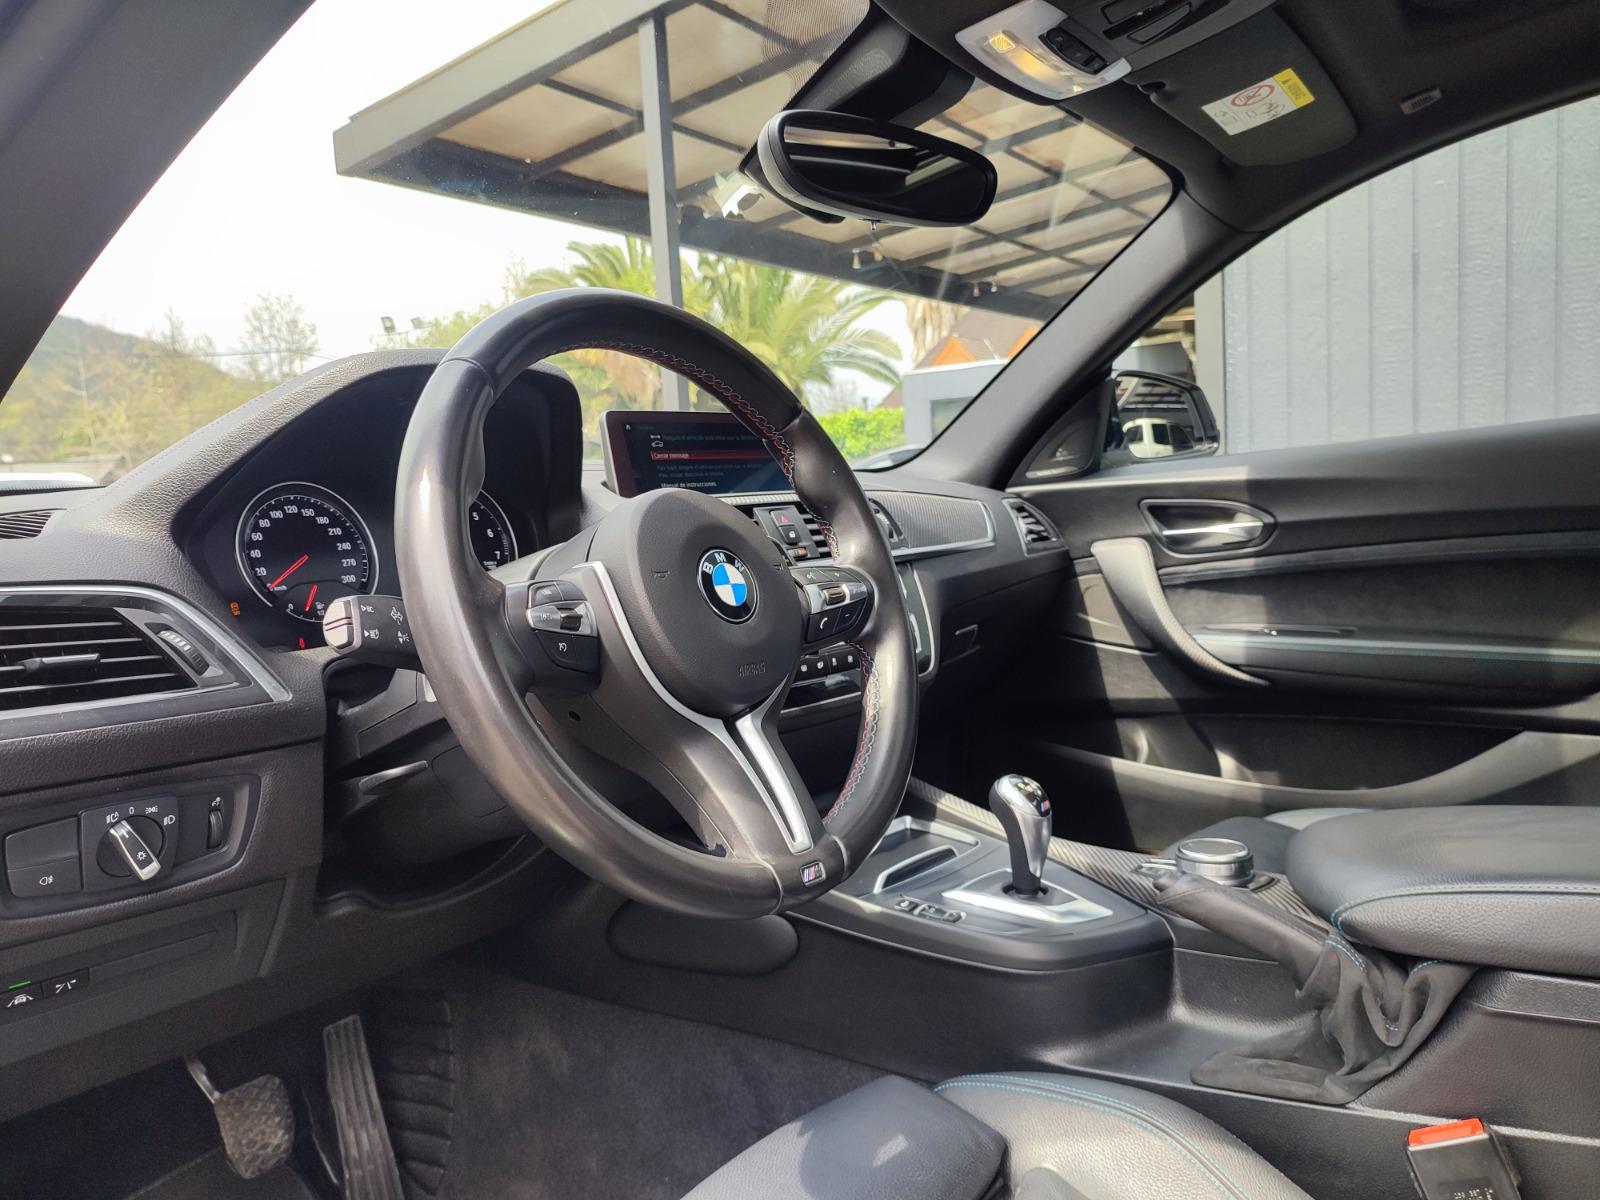 BMW M2 3.0 TWIN TURBO COUPE 2019 ECU TUNNING, MANTENCION RECIEN HECHA - K2 AUTOS